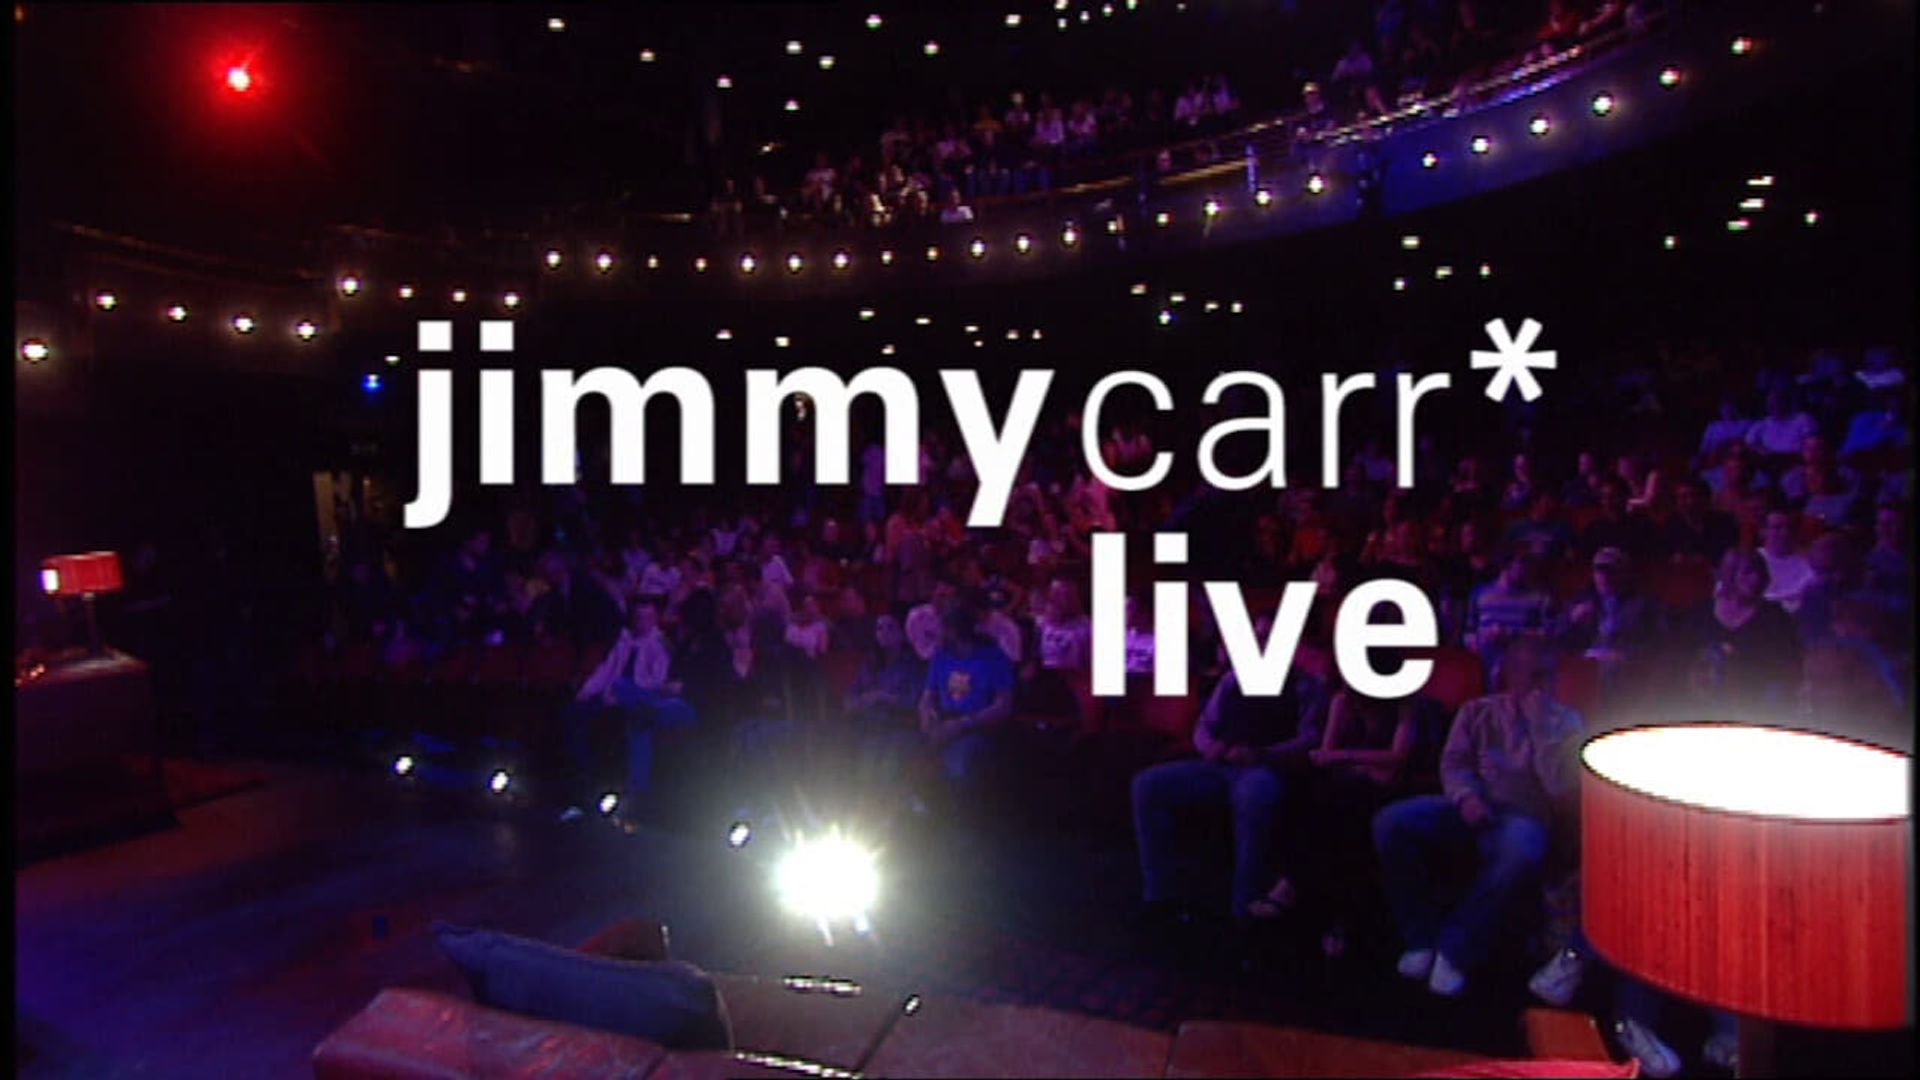 Jimmy Carr Live background